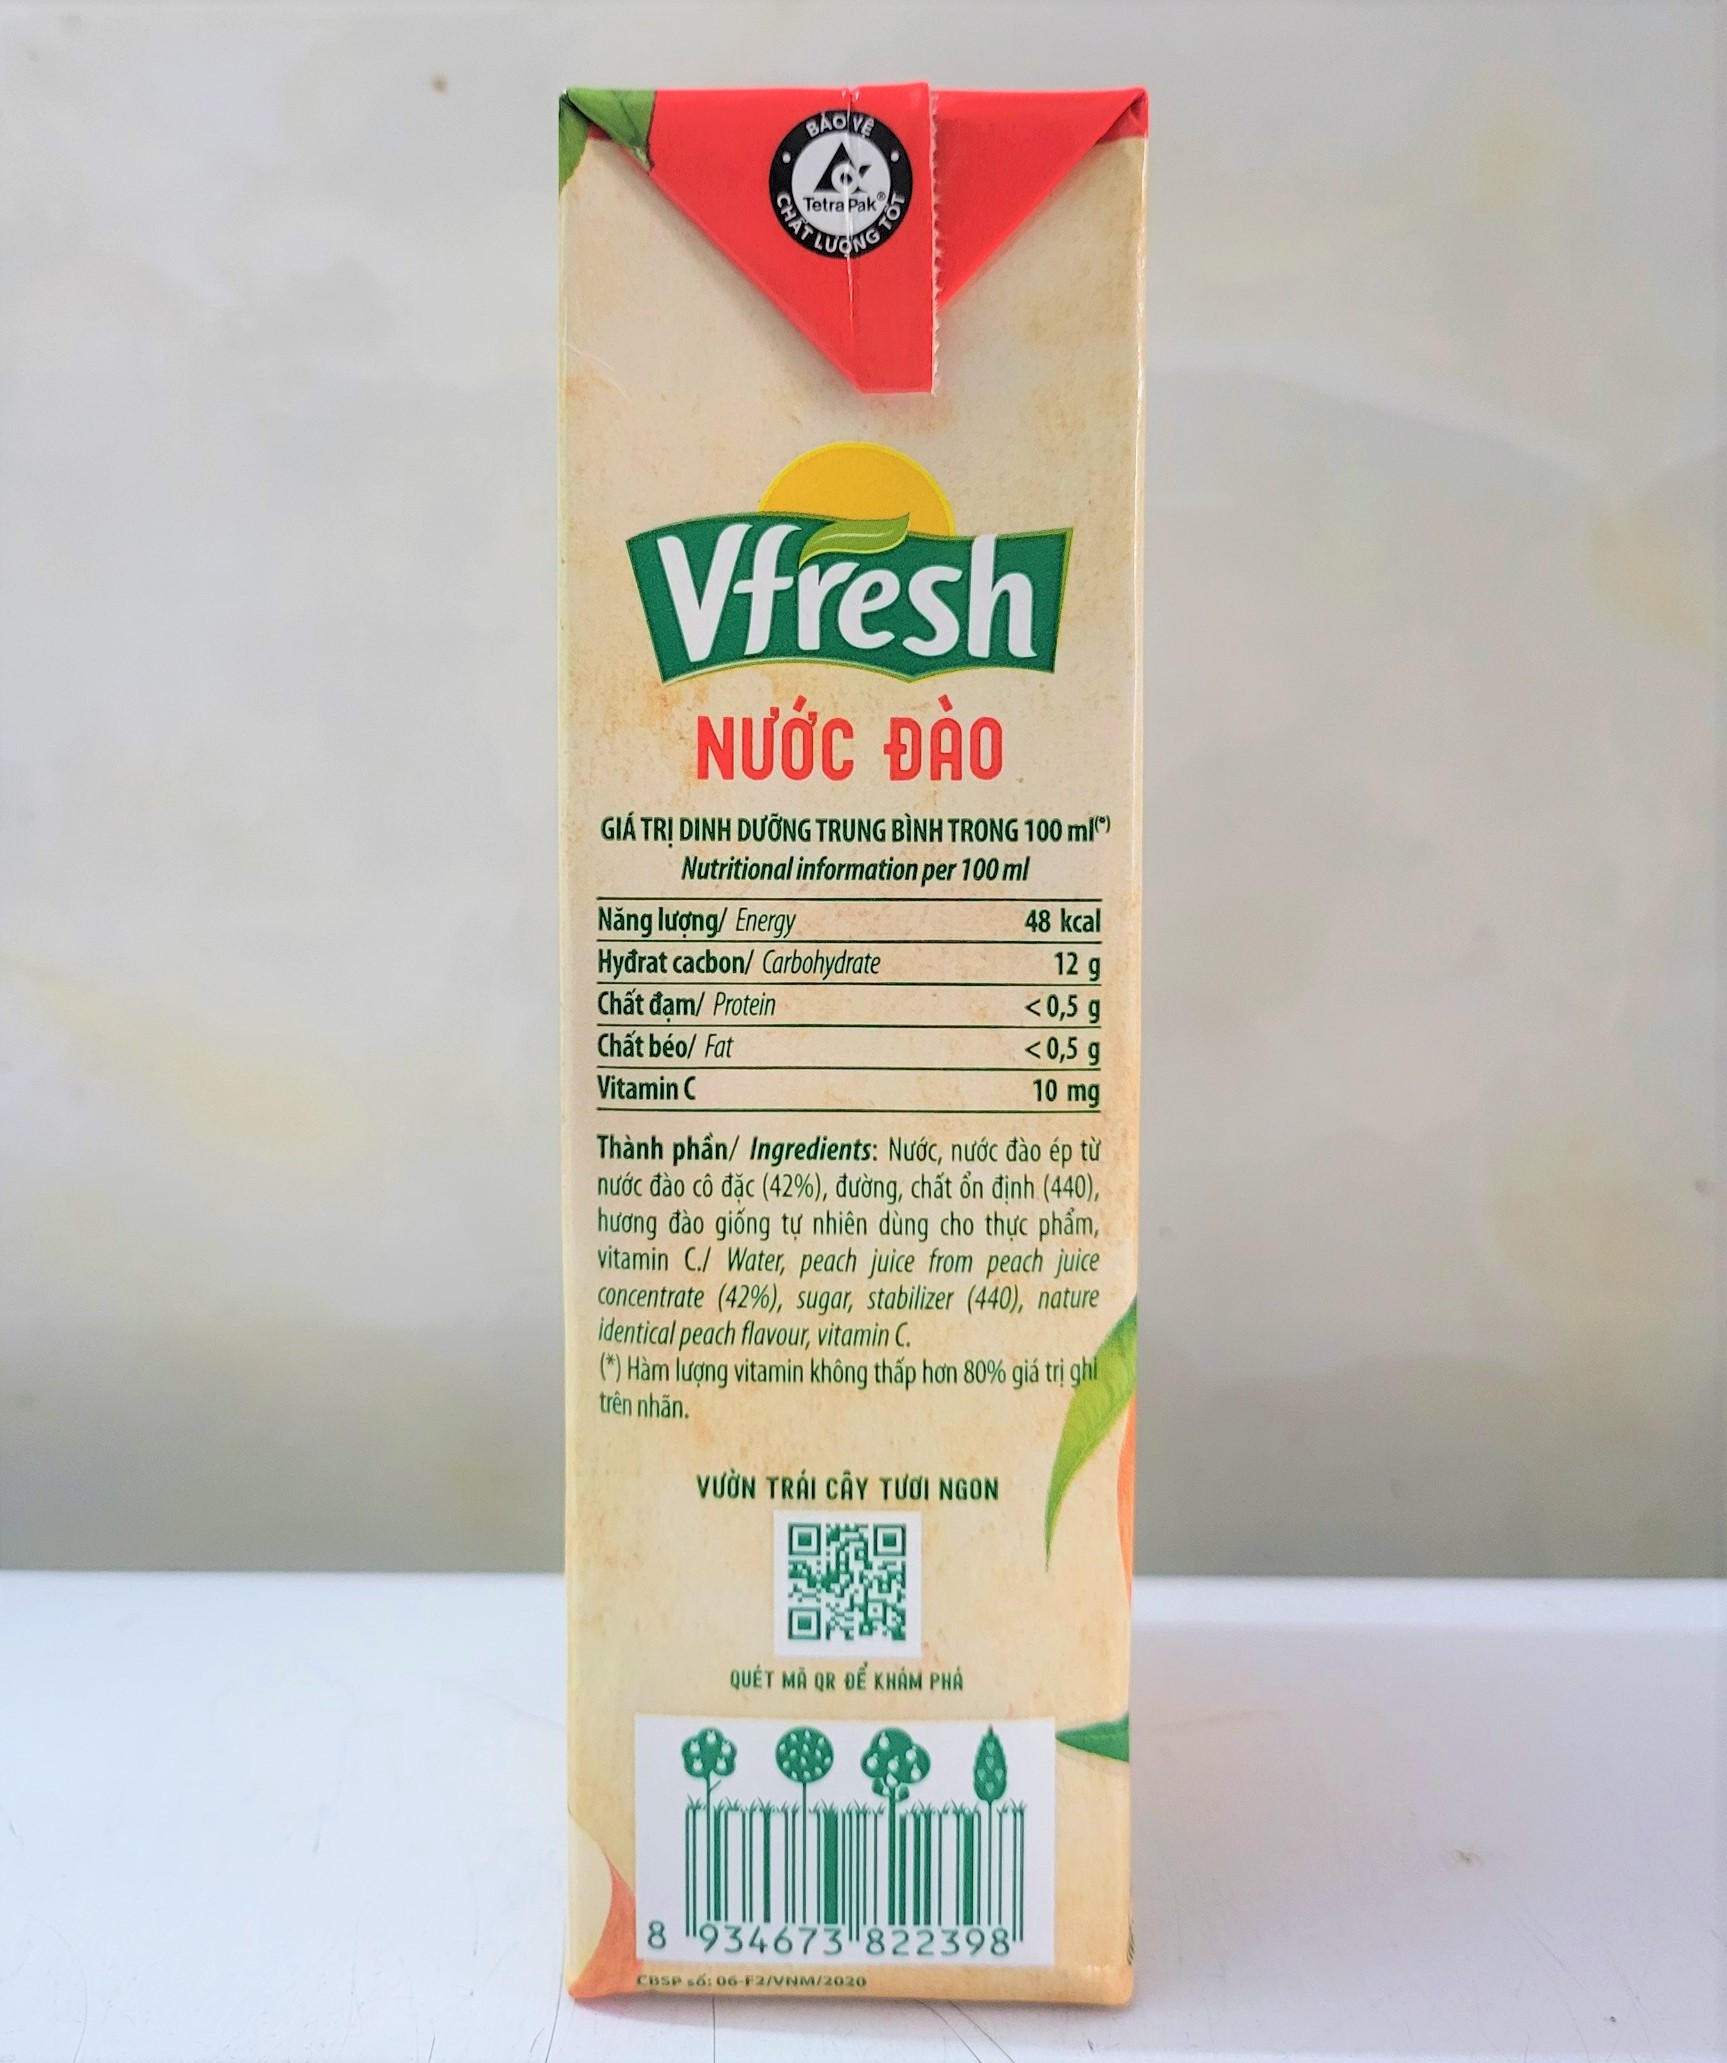 [Hộp 1 Lít] NƯỚC ÉP ĐÀO VFRESH [VN] VINAMILK Peach Nectar Juice (halal)